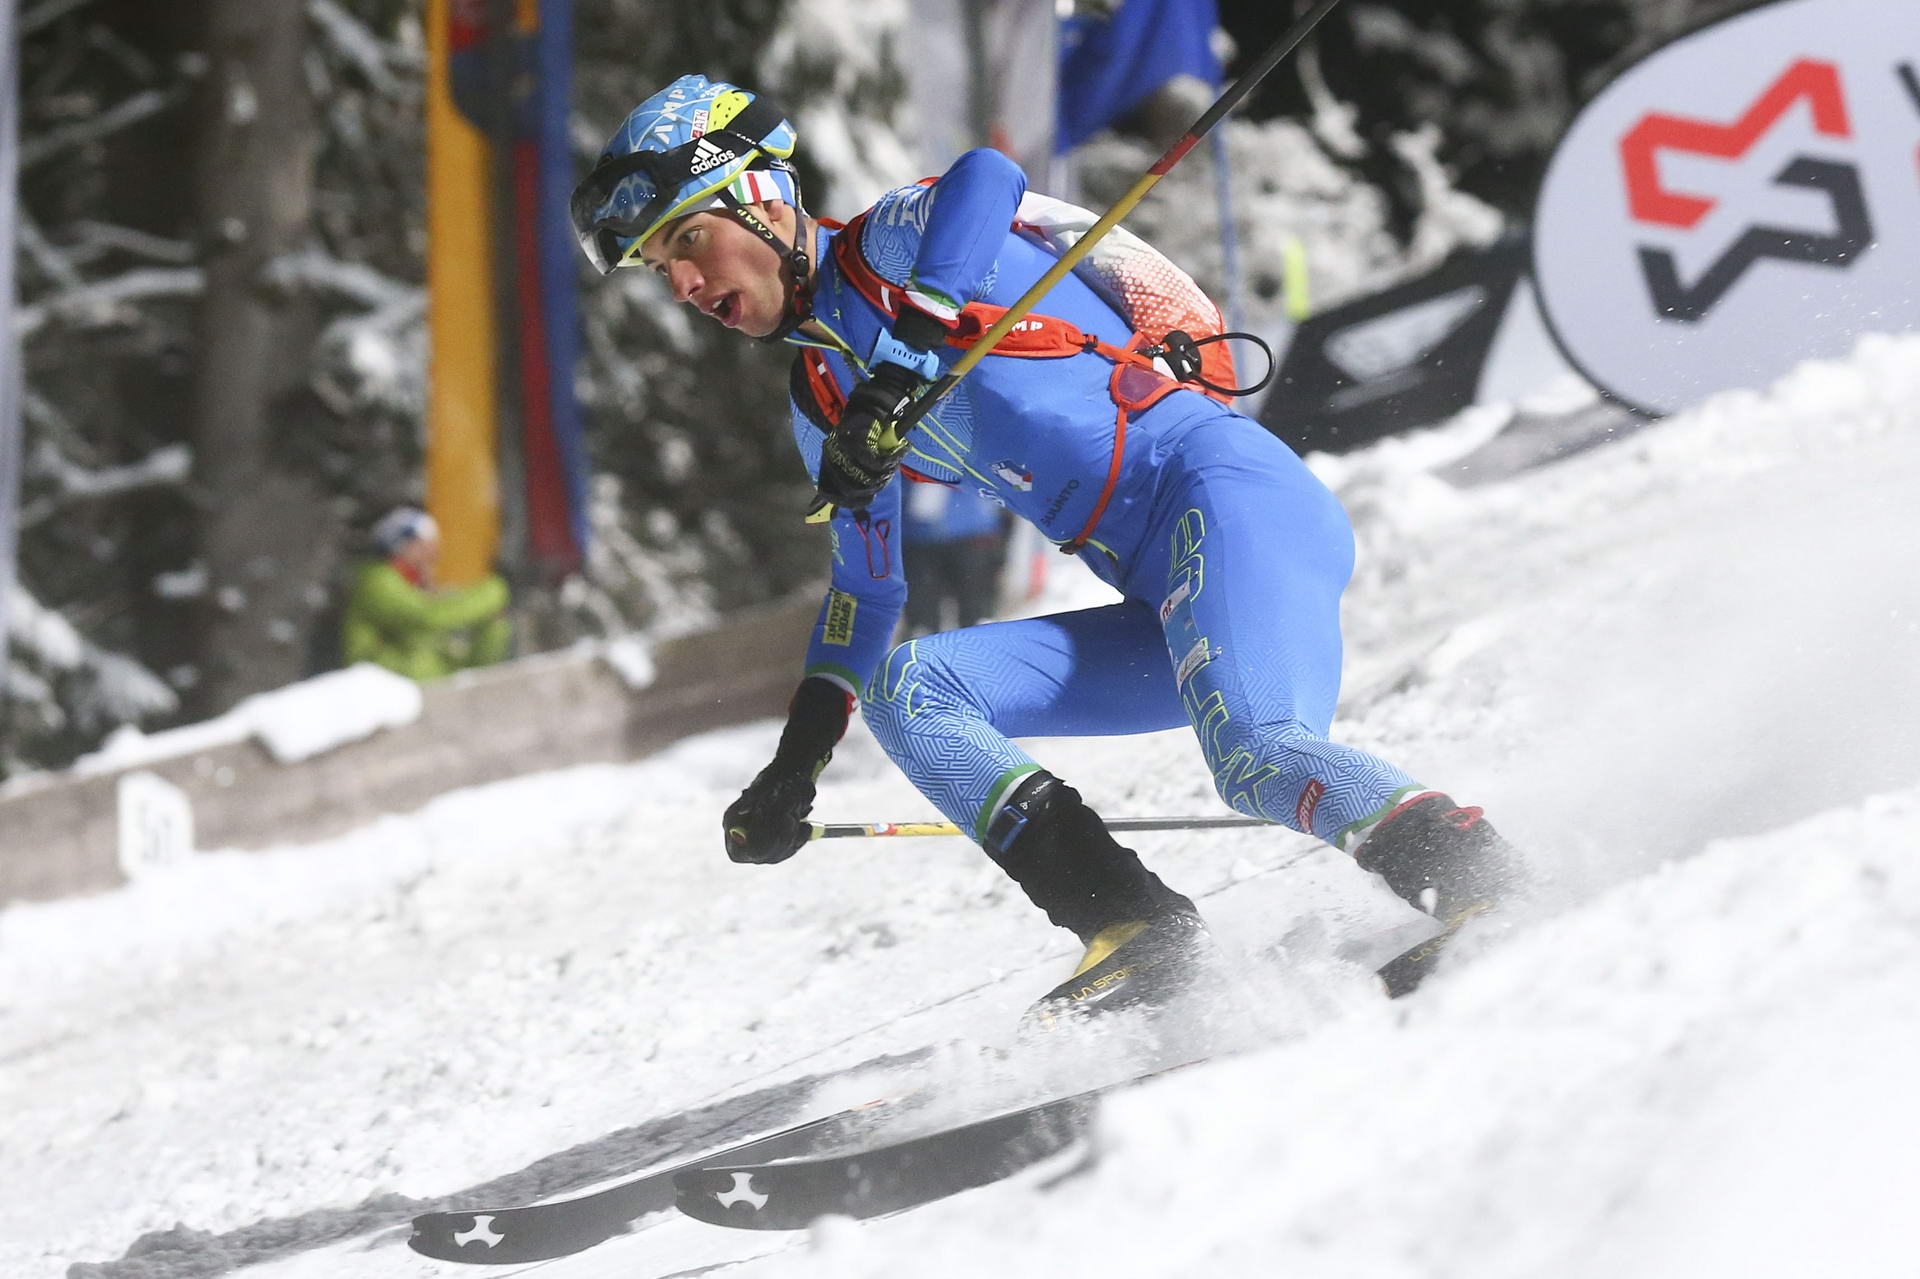 SALZBURG, AUSTRIA - JANUARY 18: Nadir Maguet of Italy during ISMF World Cup Sprint Race at Paul Ausserleitner Schanze on January 18, 2019 in Salzburg, Austria.